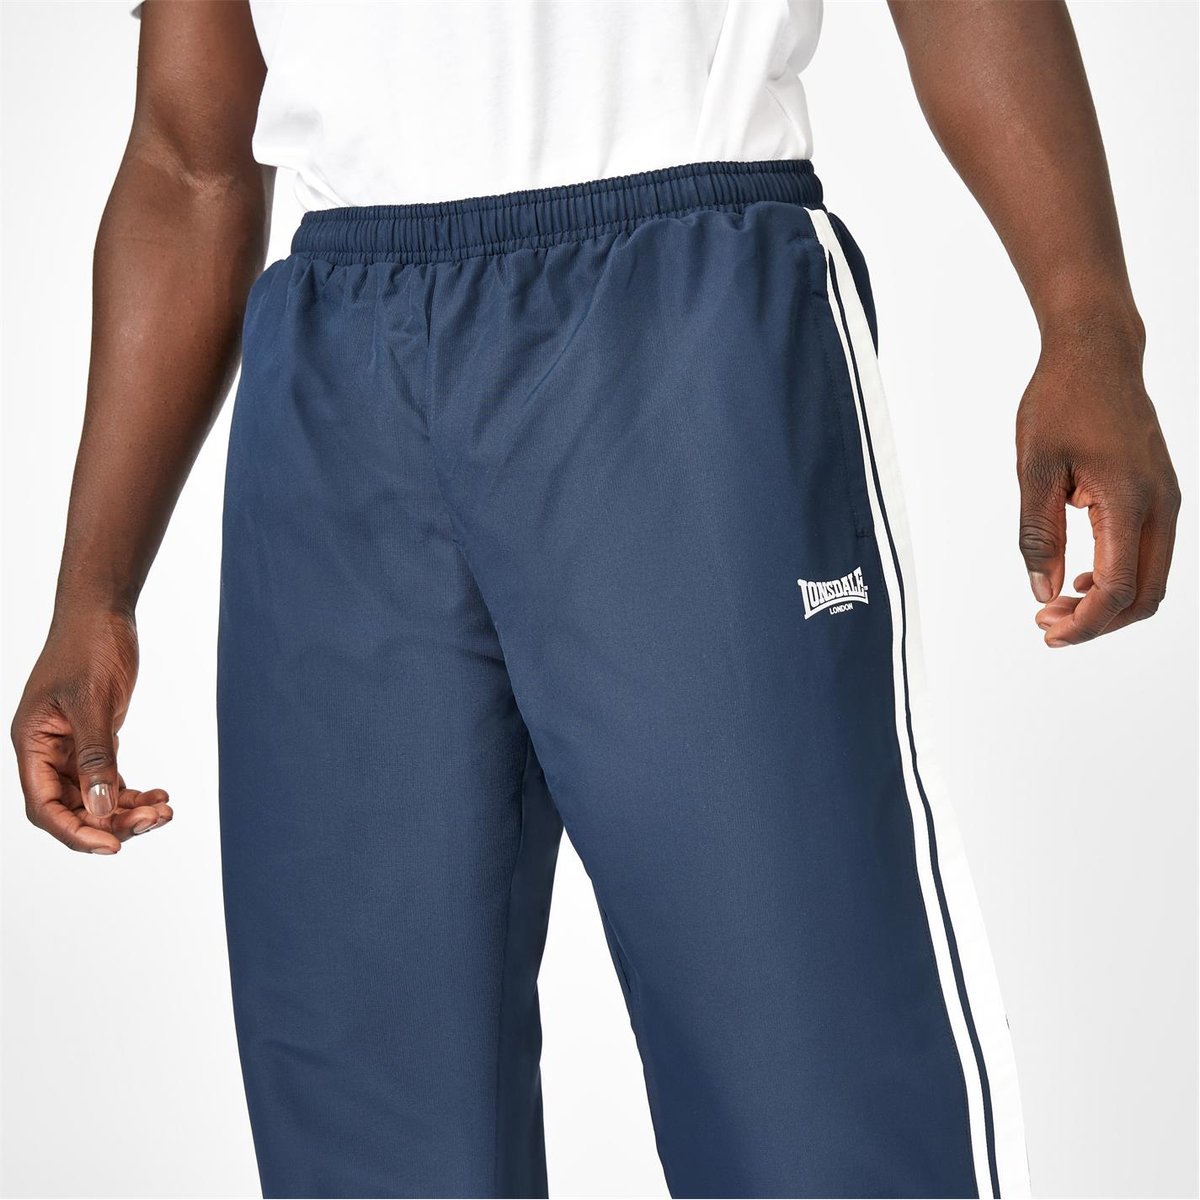 Roberto Cavalli Black Sport Stripe Pants, Size Large JYX04P-FT092-05051 -  Apparel - Jomashop